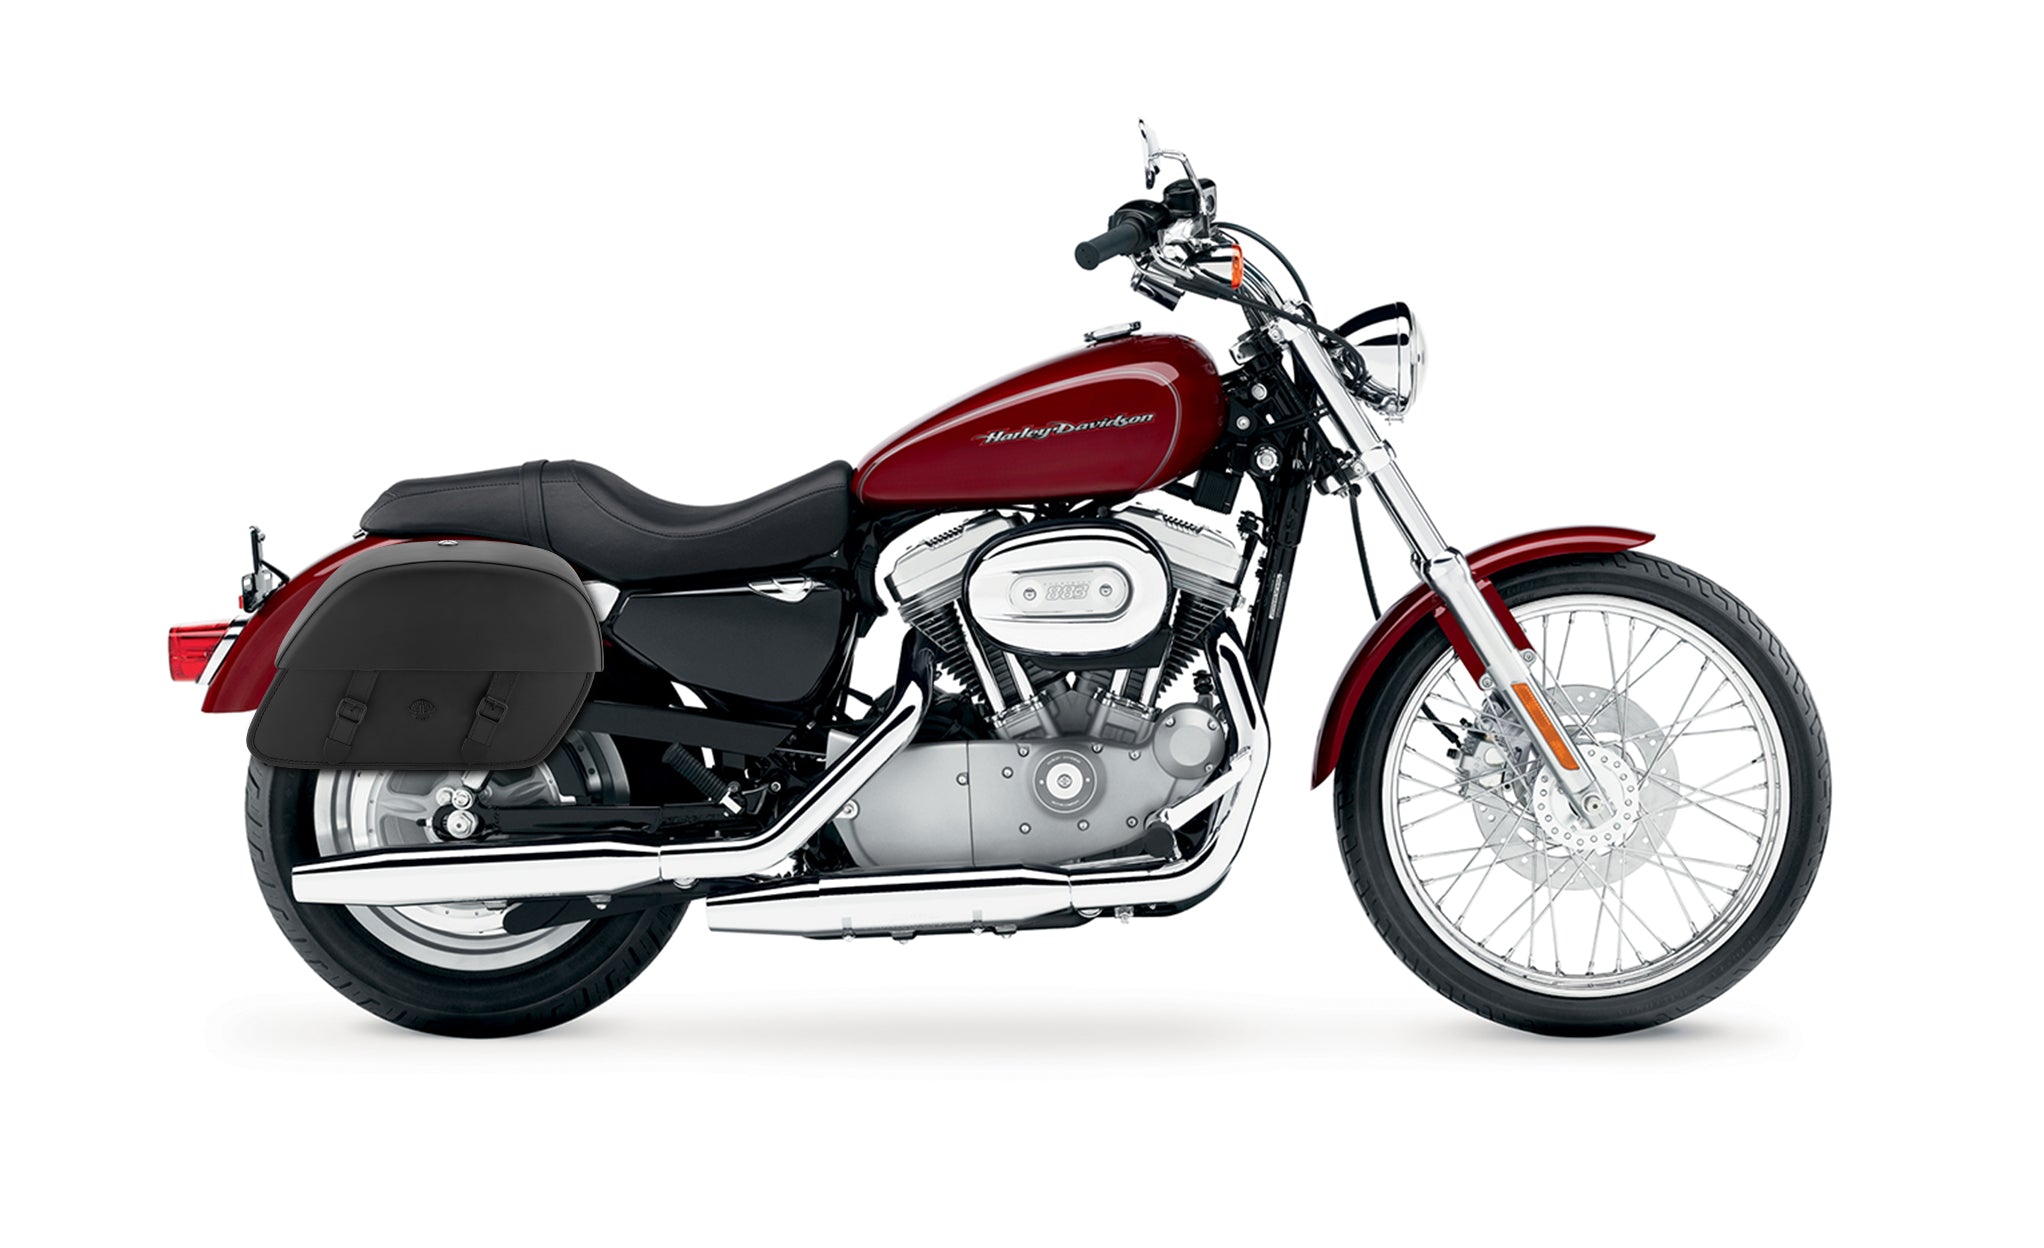 28L - Baelor Medium Quick Mount Motorcycle Saddlebags For Harley Sportster 883 Custom XL883C/XLH883C @expand